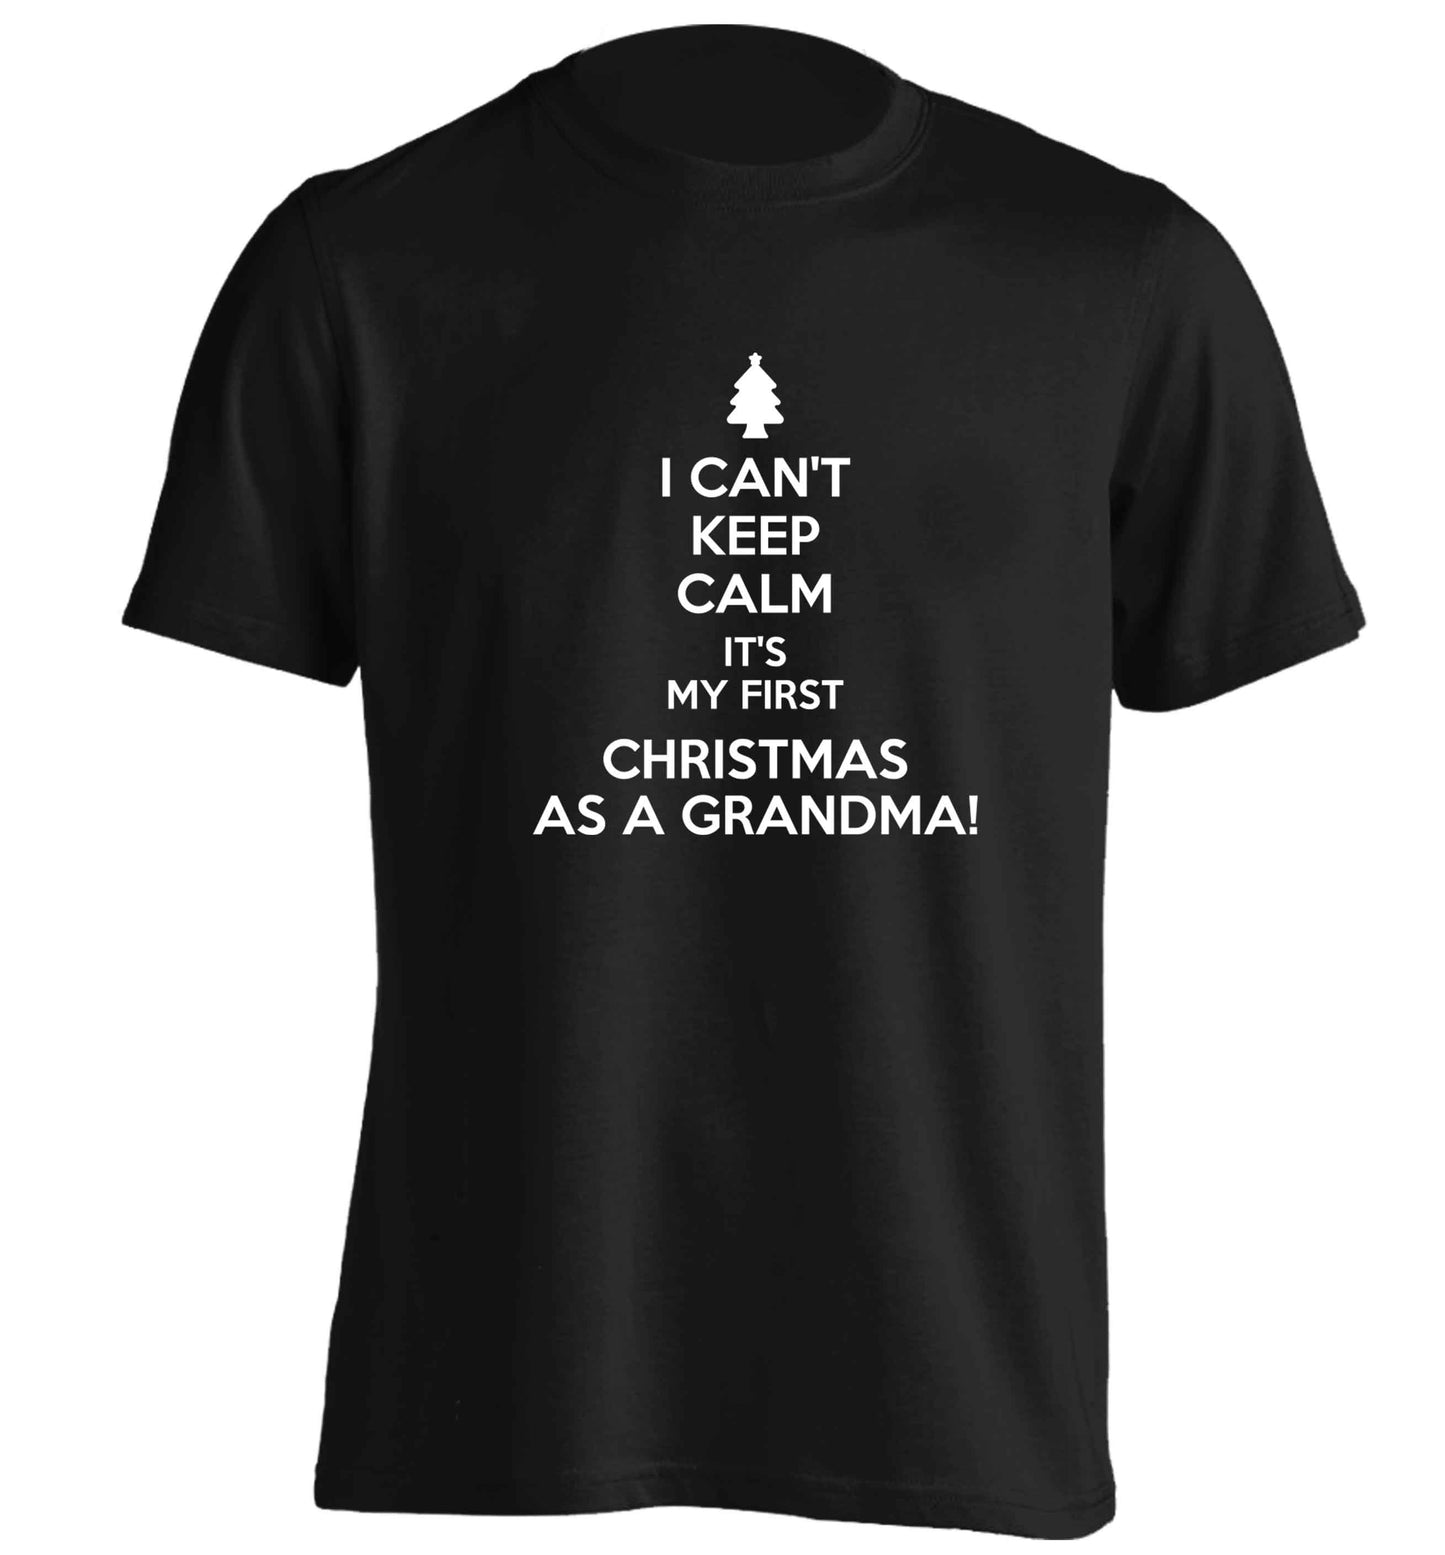 I can't keep calm it's my first Christmas as a grandma! adults unisex black Tshirt 2XL